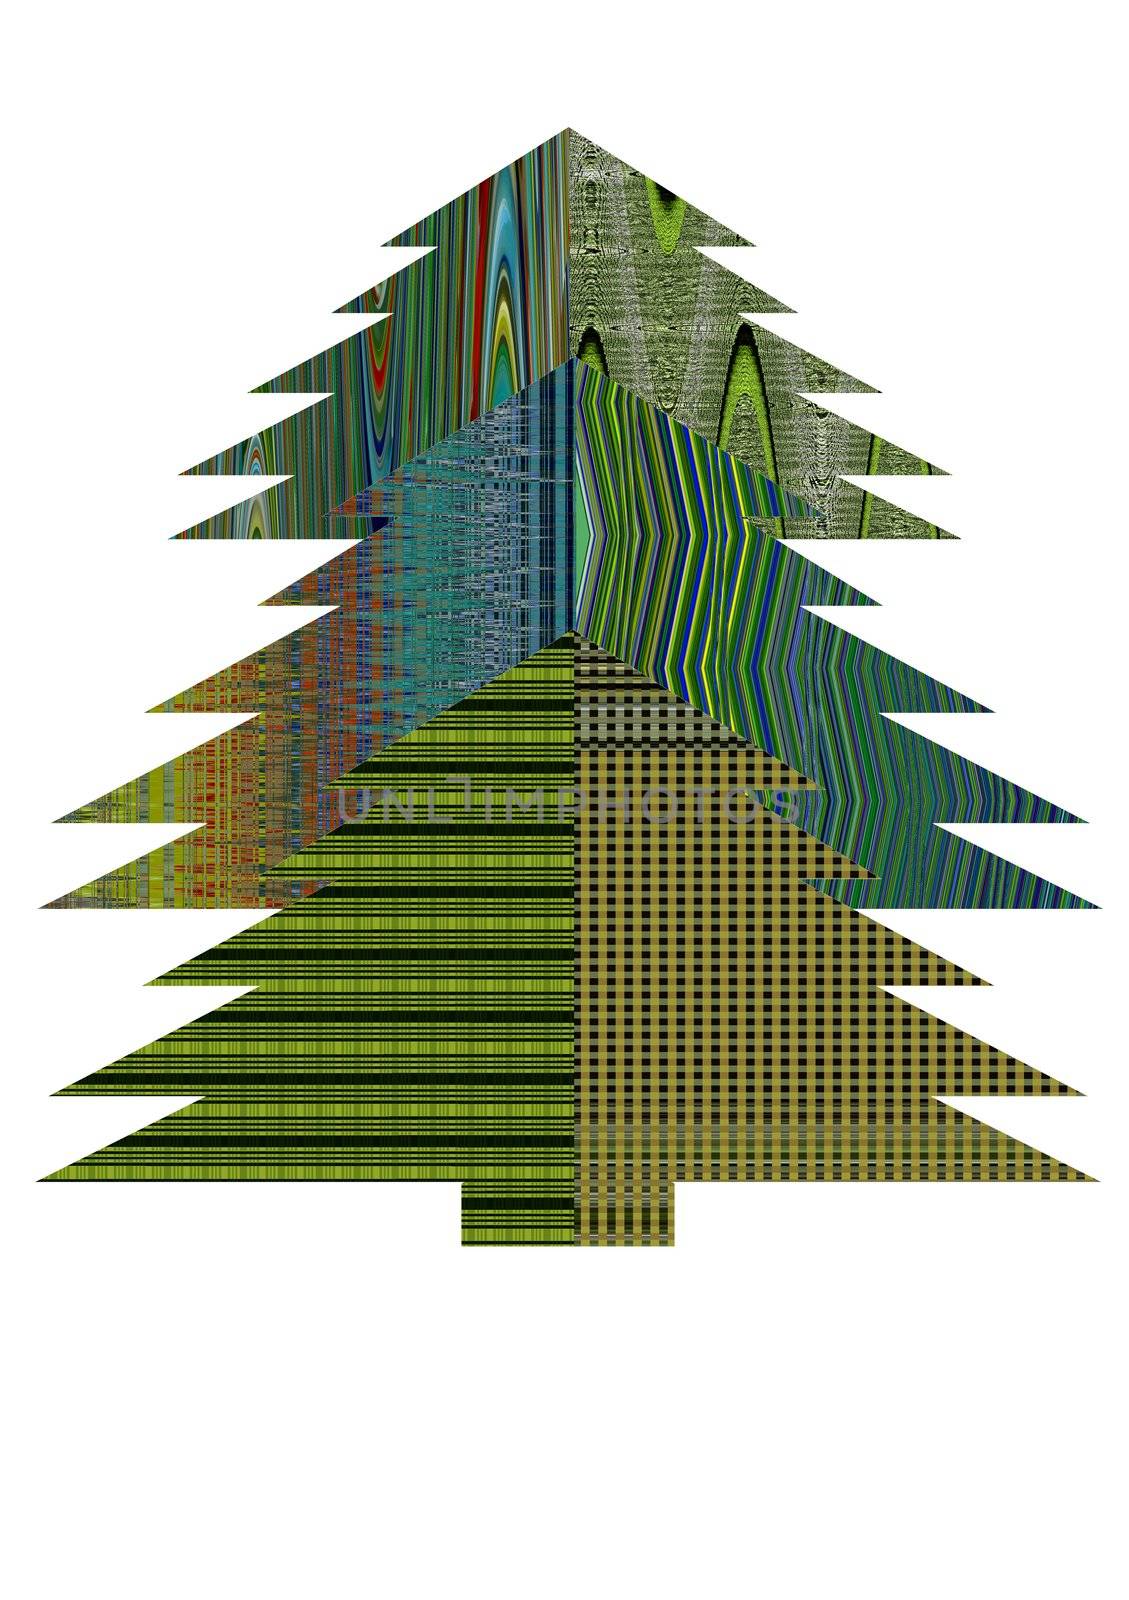 Christmas tree with geometric designs